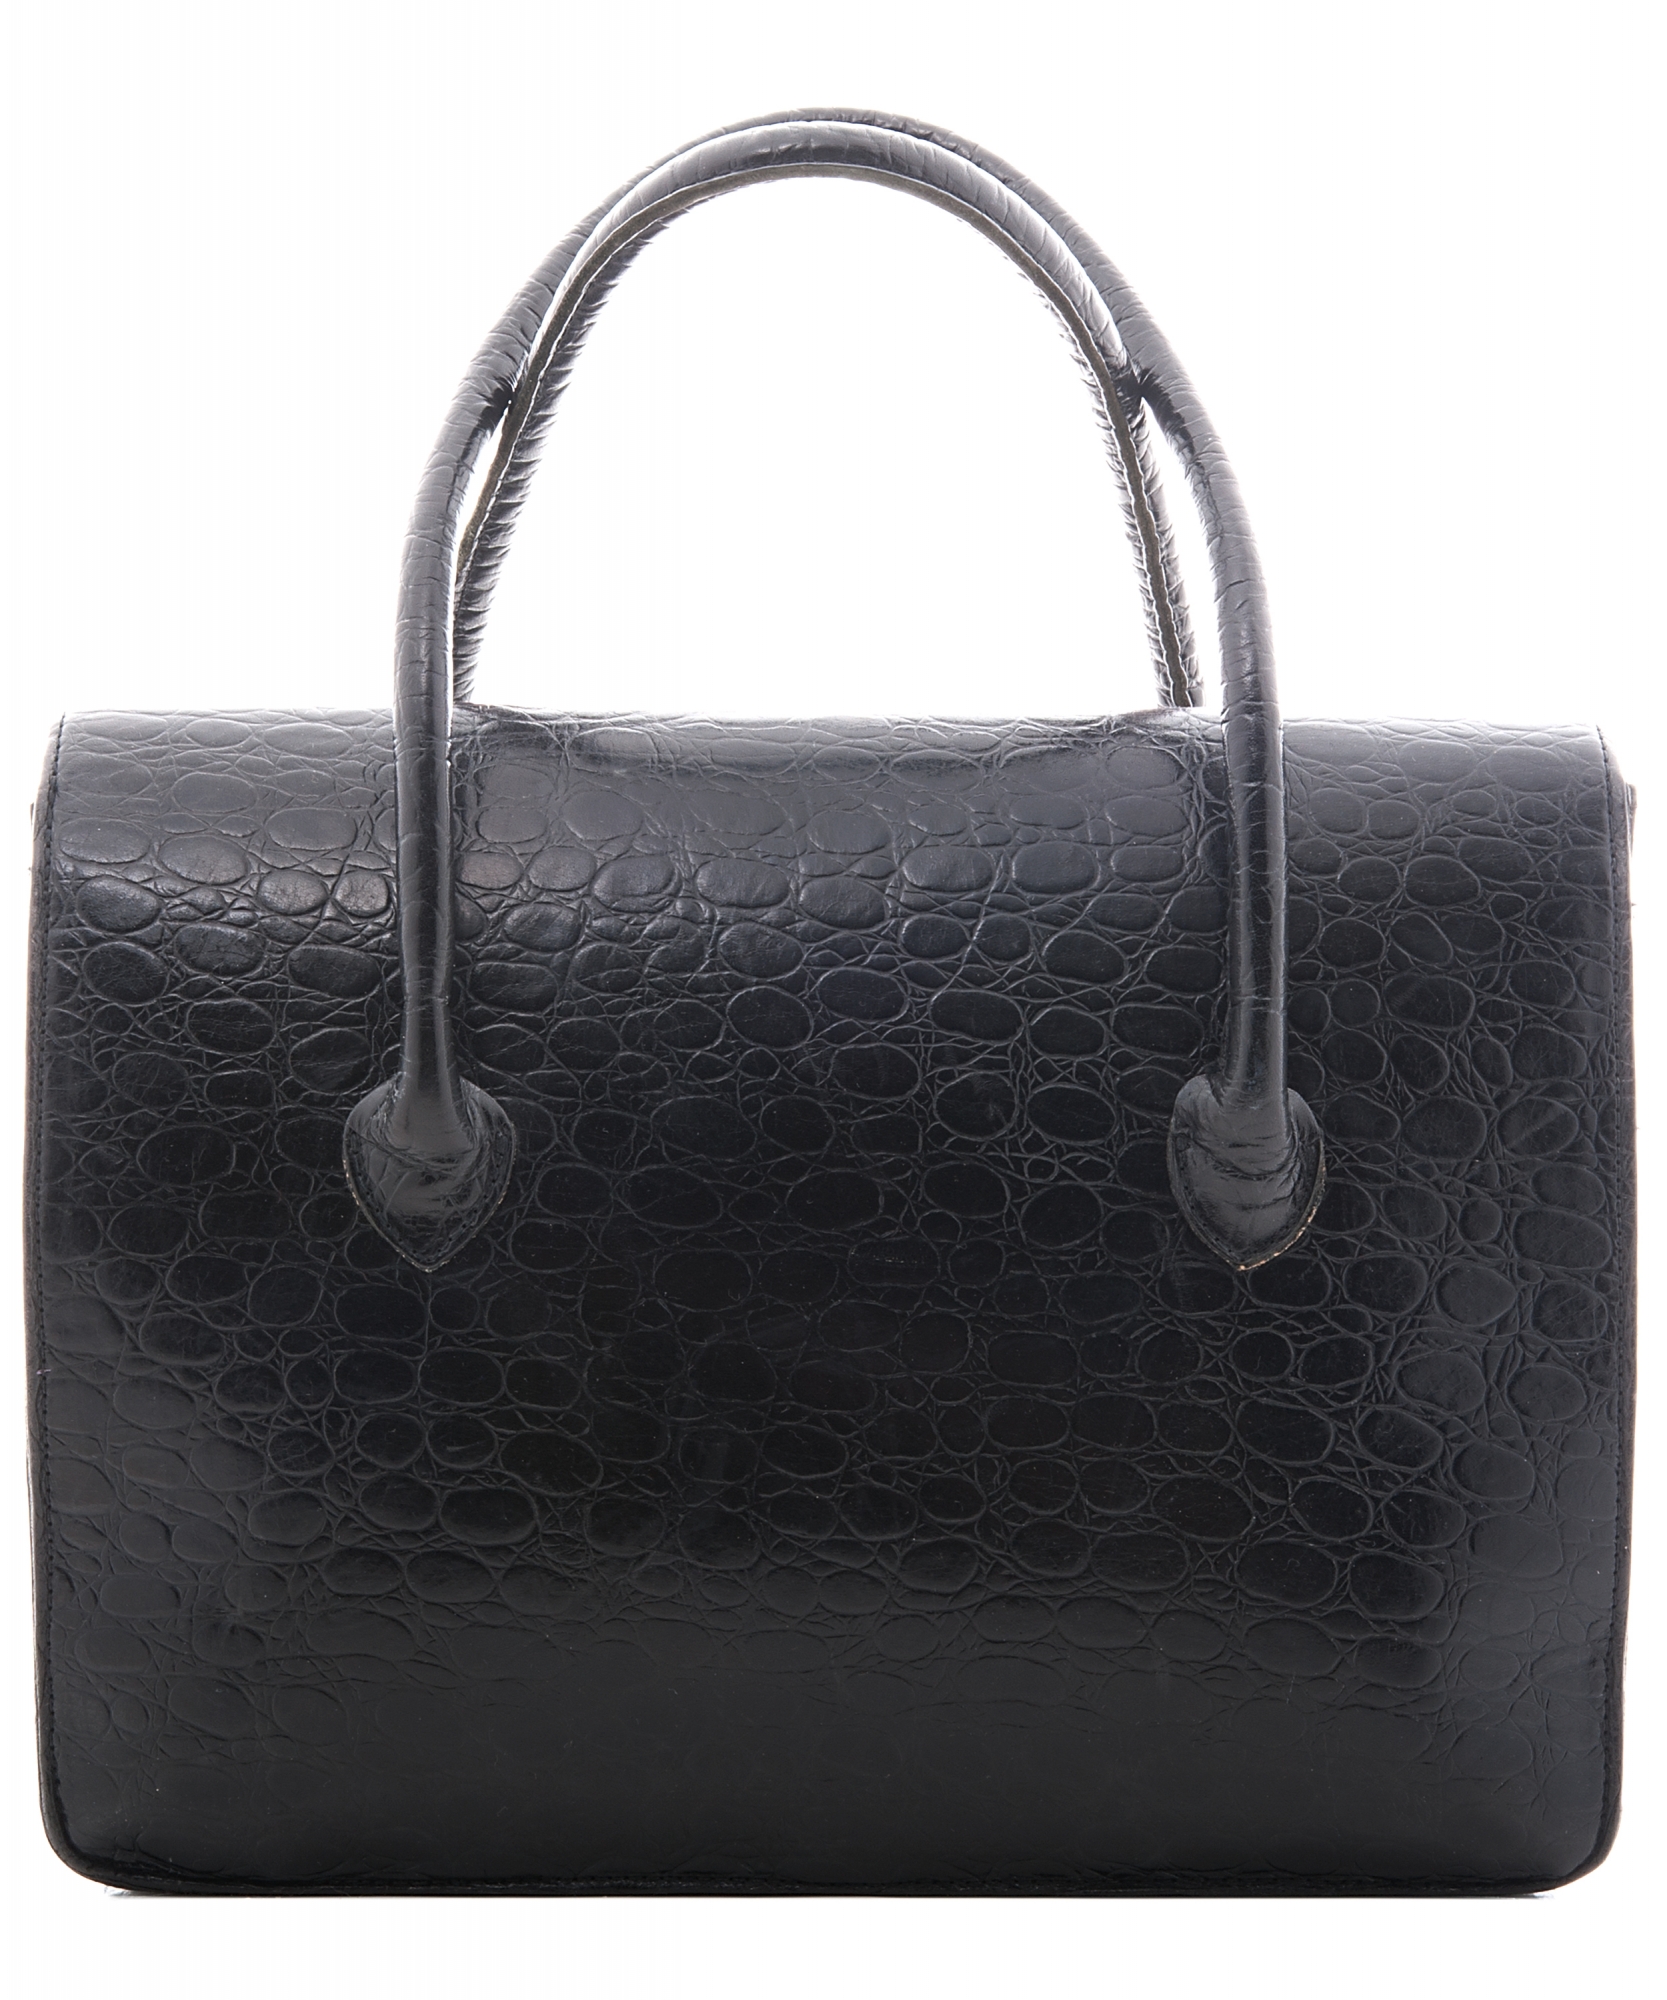 Mulberry Vintage Handbag in Black Croc Embossed Leather | La Doyenne